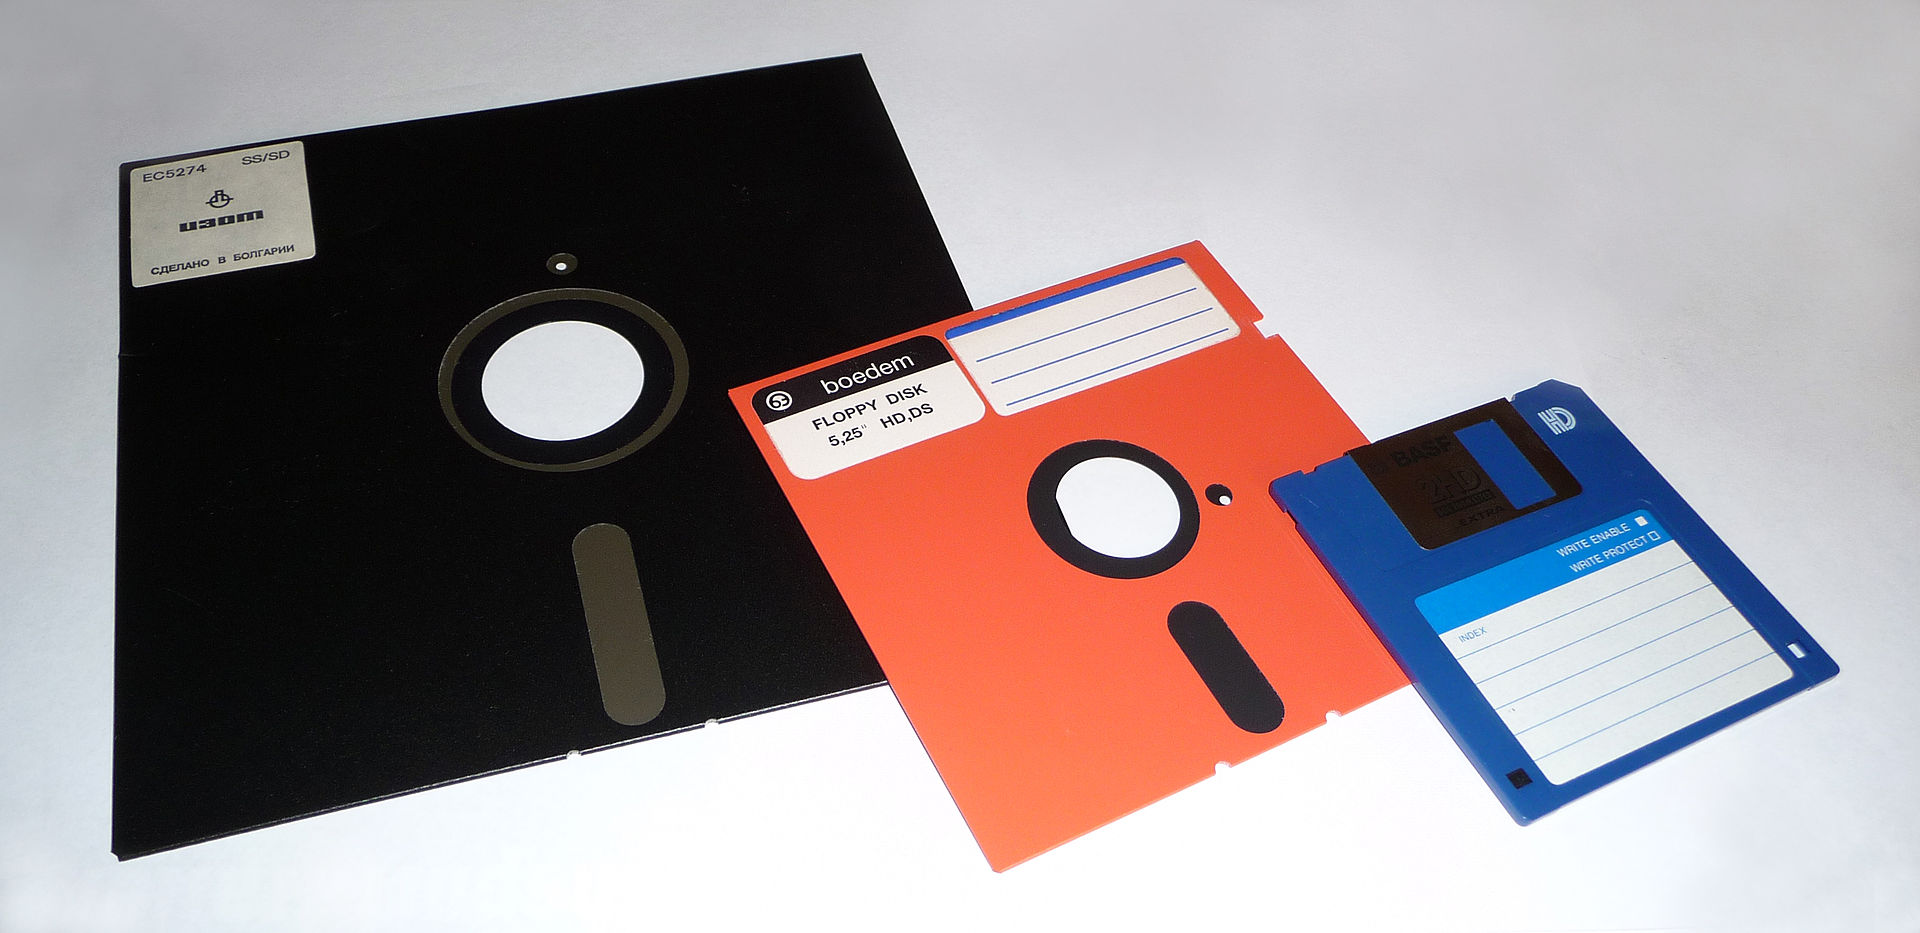 floppy_disk_tinhte.jpg